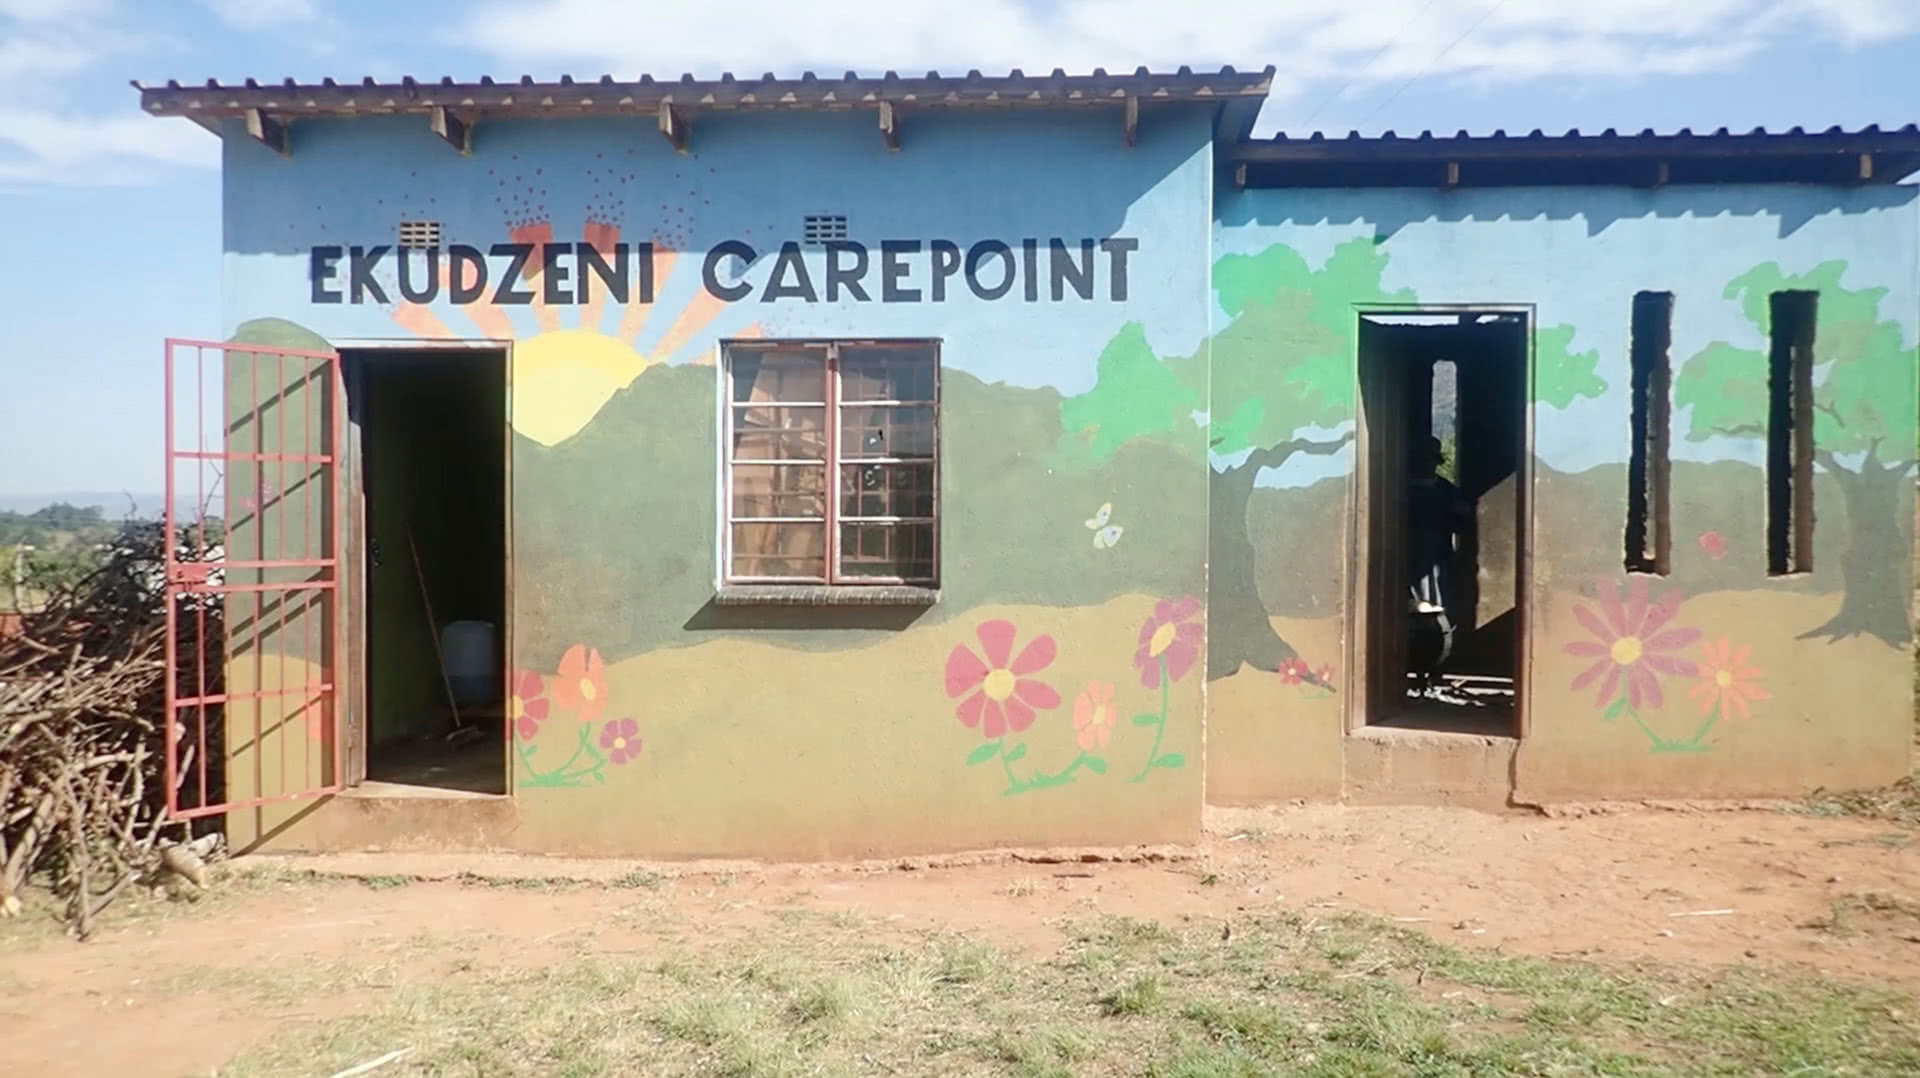 cooks serving children at Ekudzeni CarePoint in Eswatini Africa